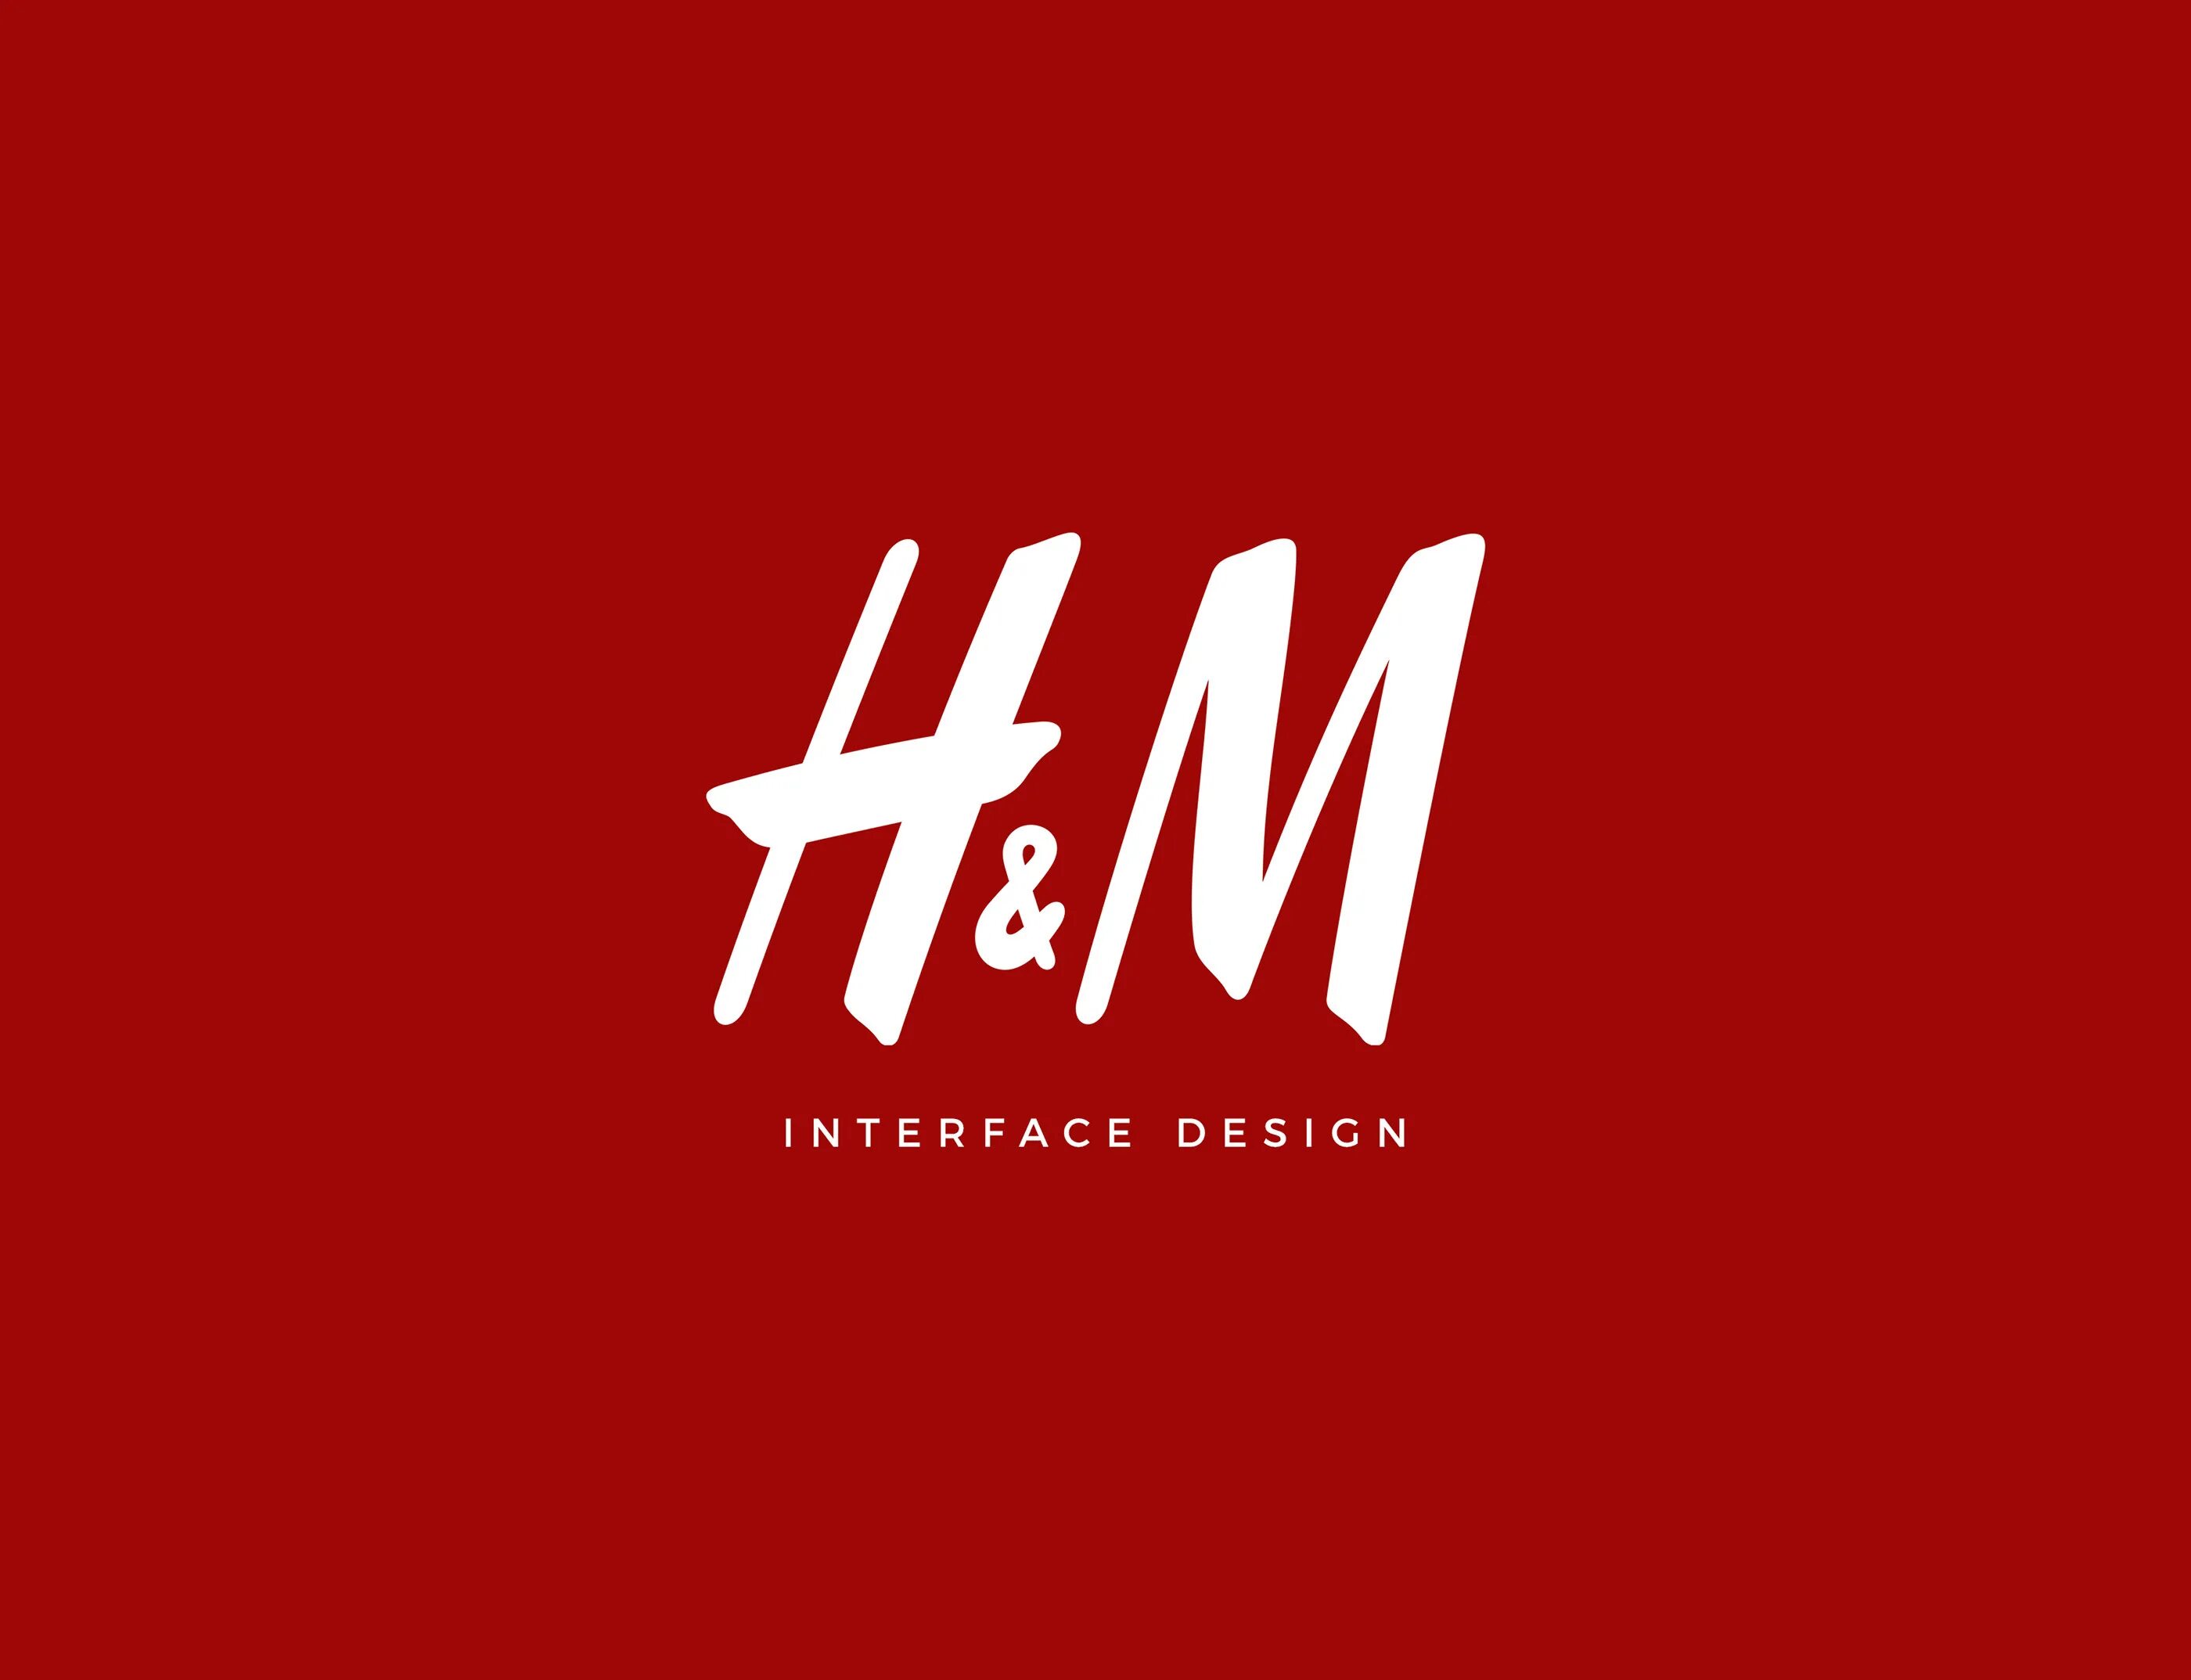 Https m com h. НМ логотип. Бренд h m. Компания h m логотип. Логотип магазина одежды h&m.